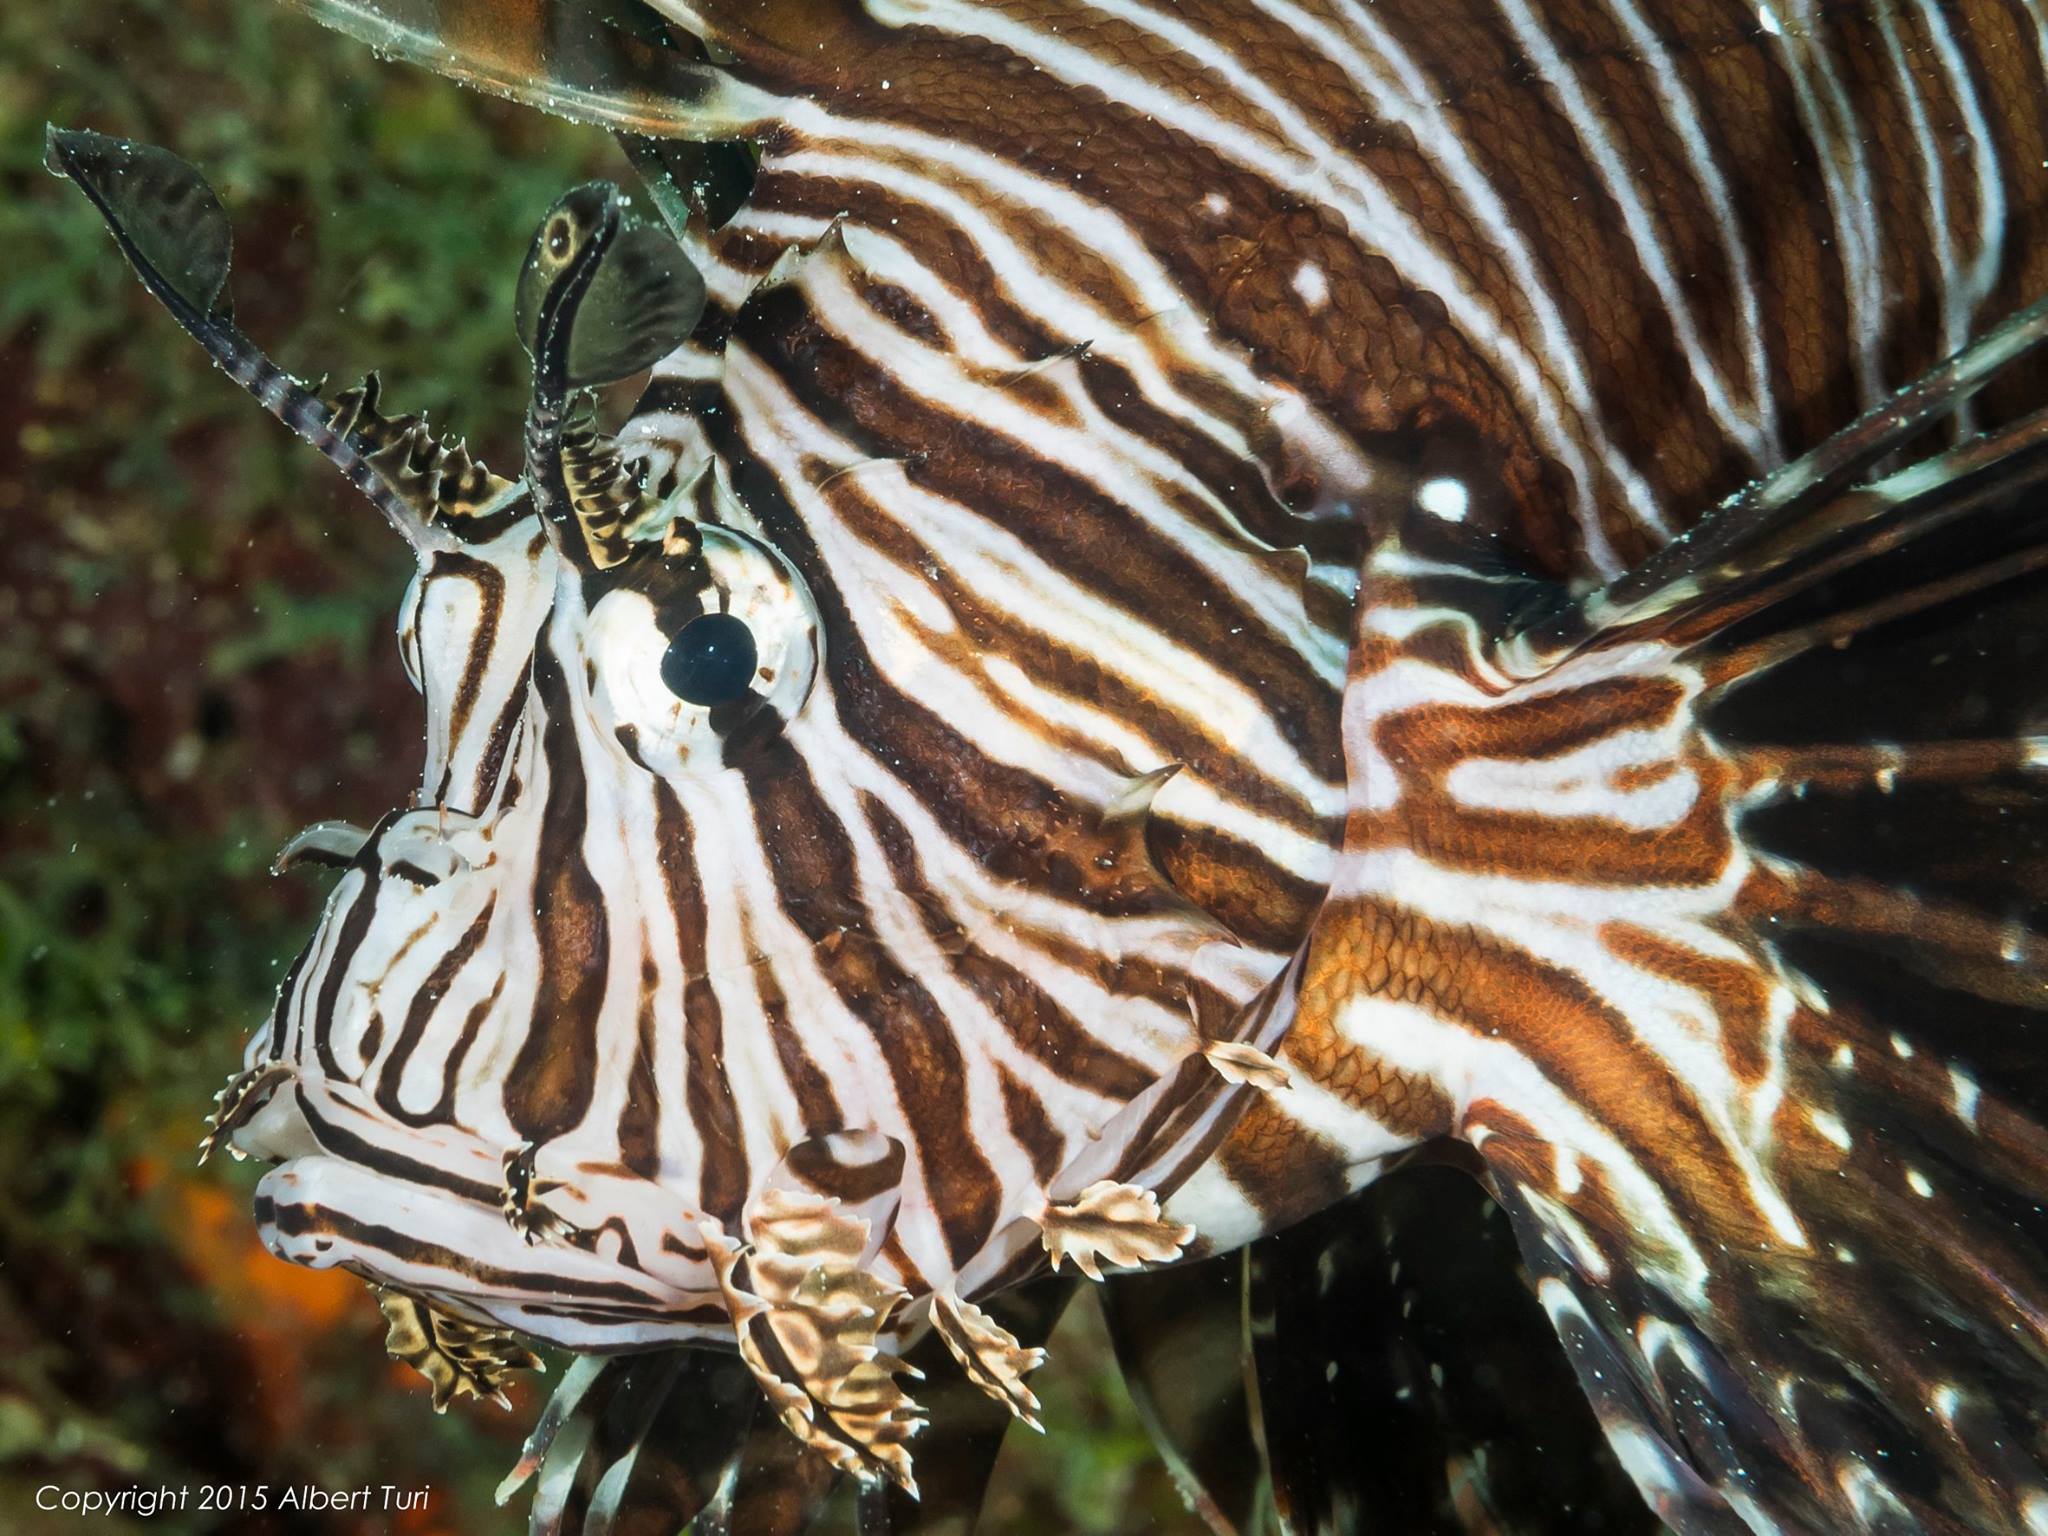 Lionfish close up